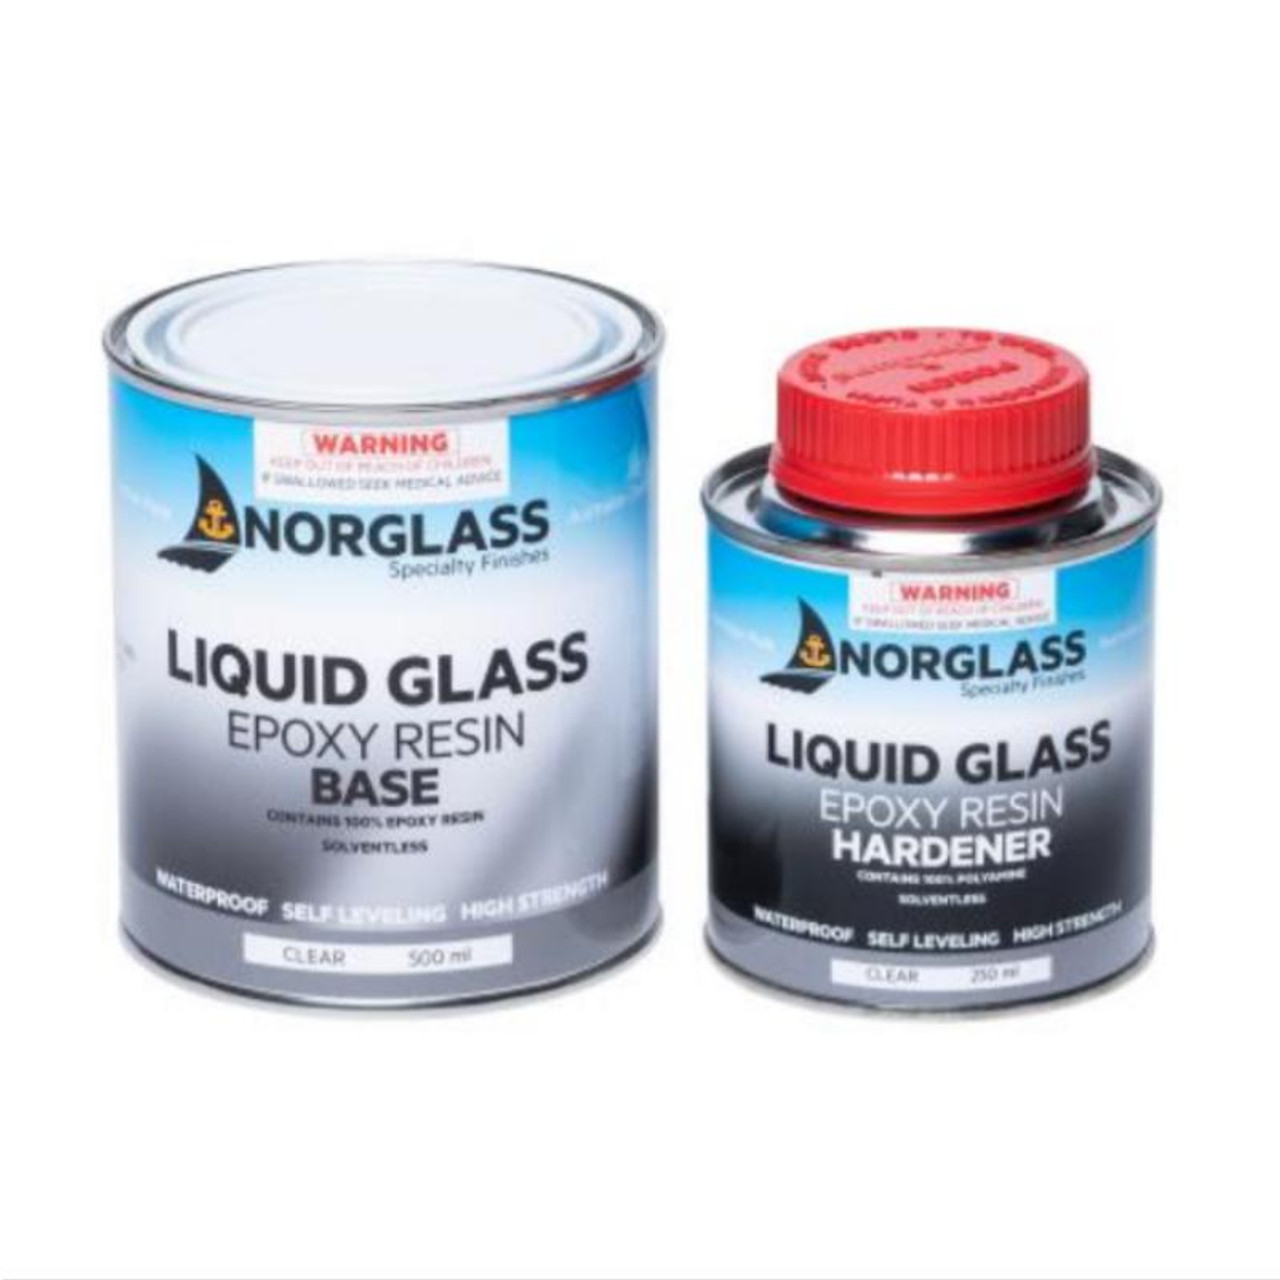 Norglass Liquid Glass Epoxy Resin Kit (1303 1293 1283)